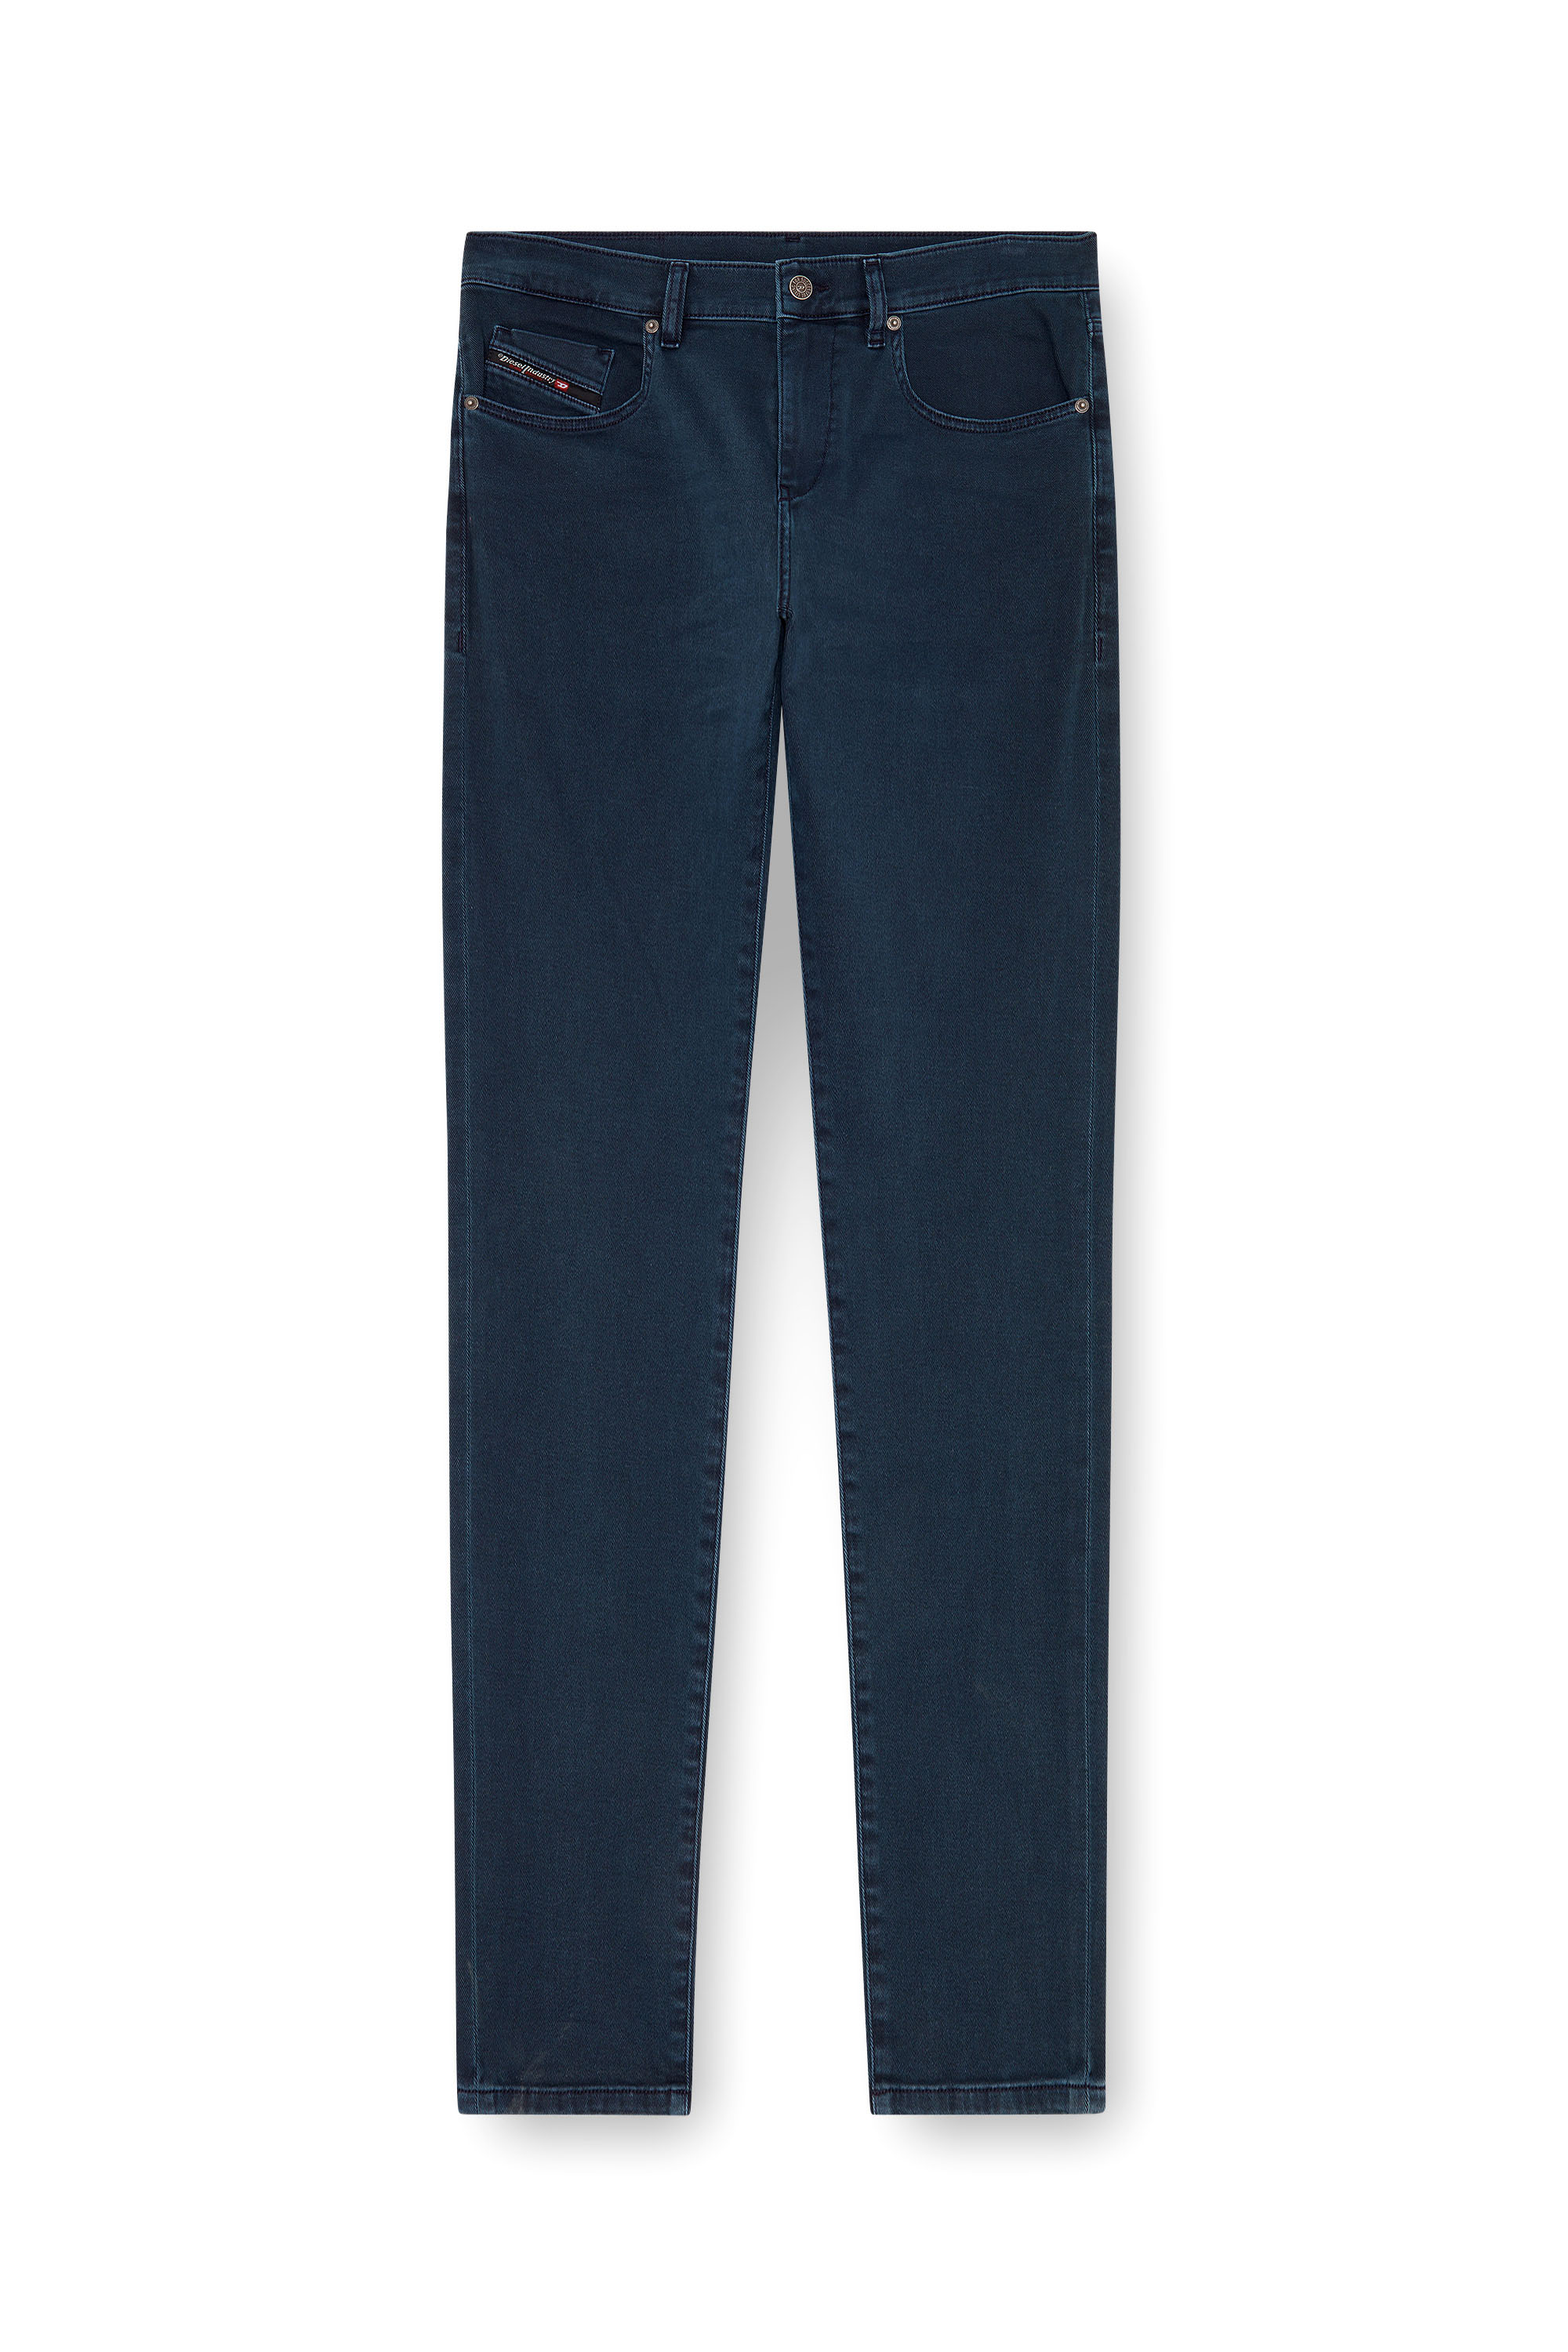 Diesel - Slim Jeans 2019 D-Strukt 0QWTY, Hombre Slim Jeans - 2019 D-Strukt in Azul marino - Image 5